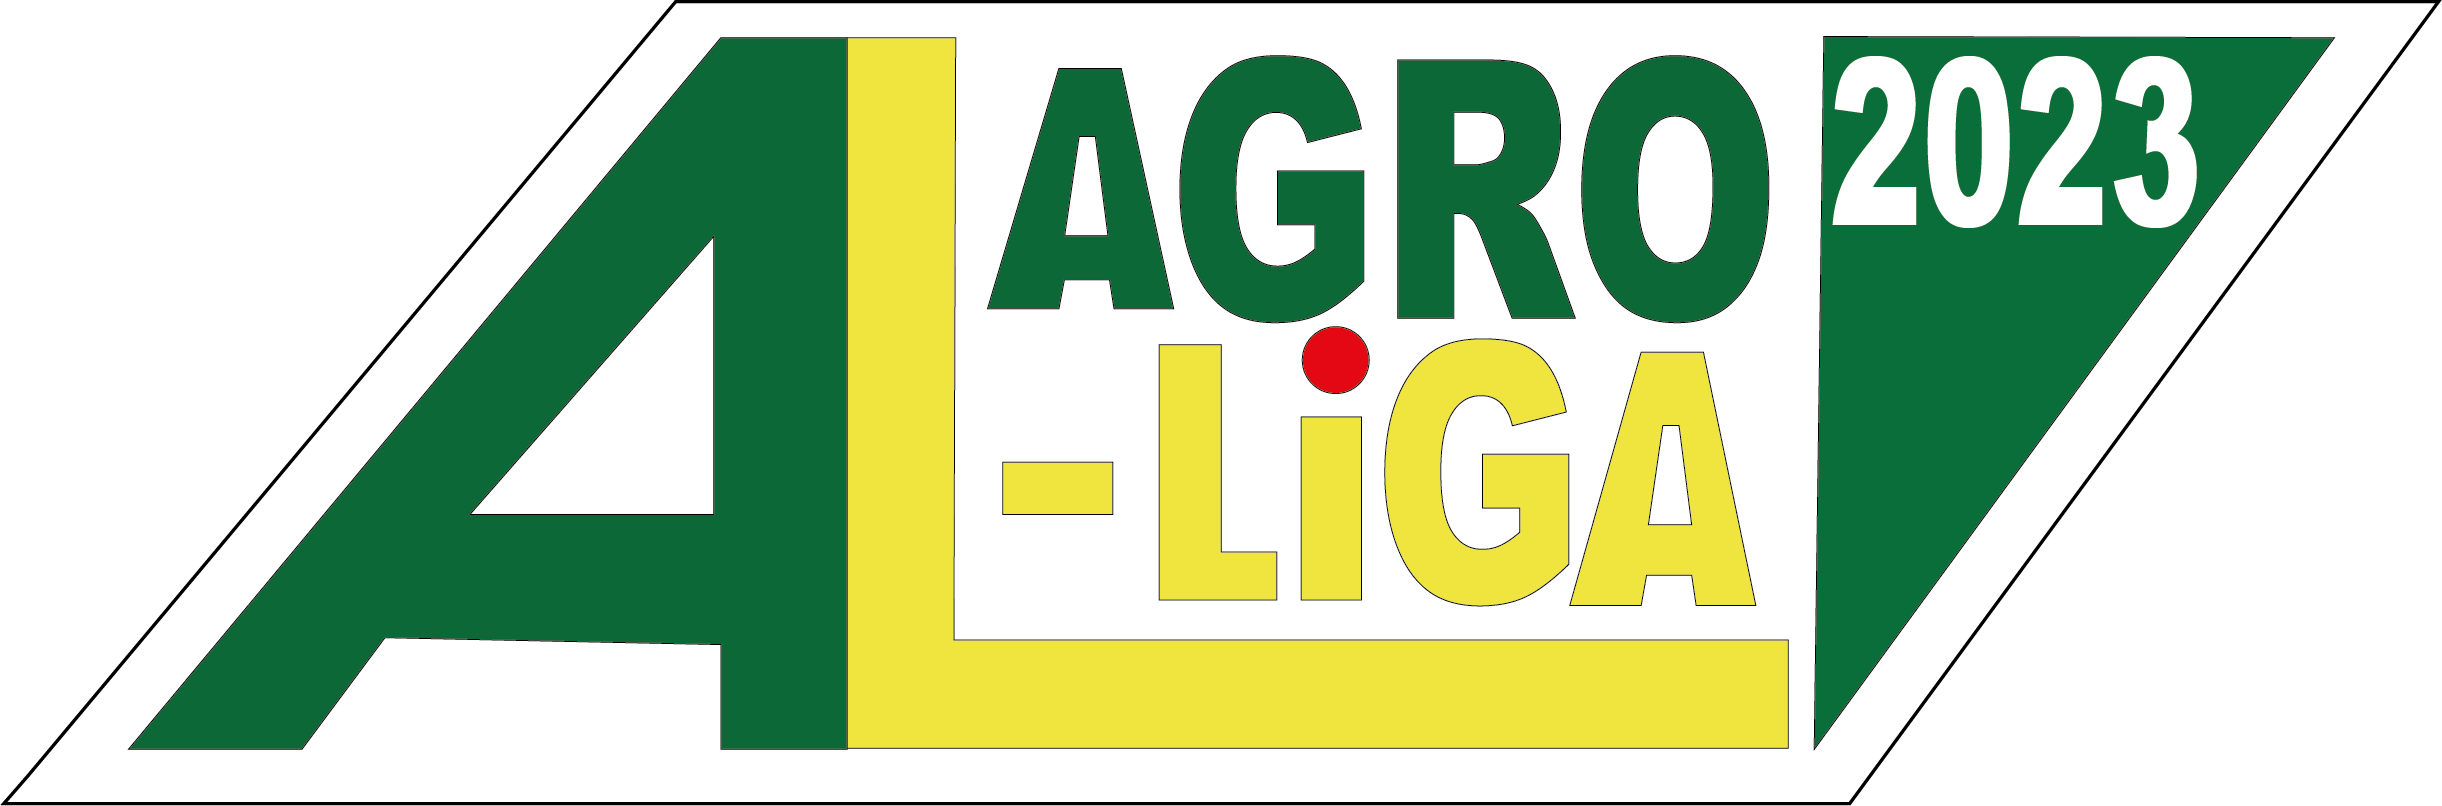 agroliga-2023.png